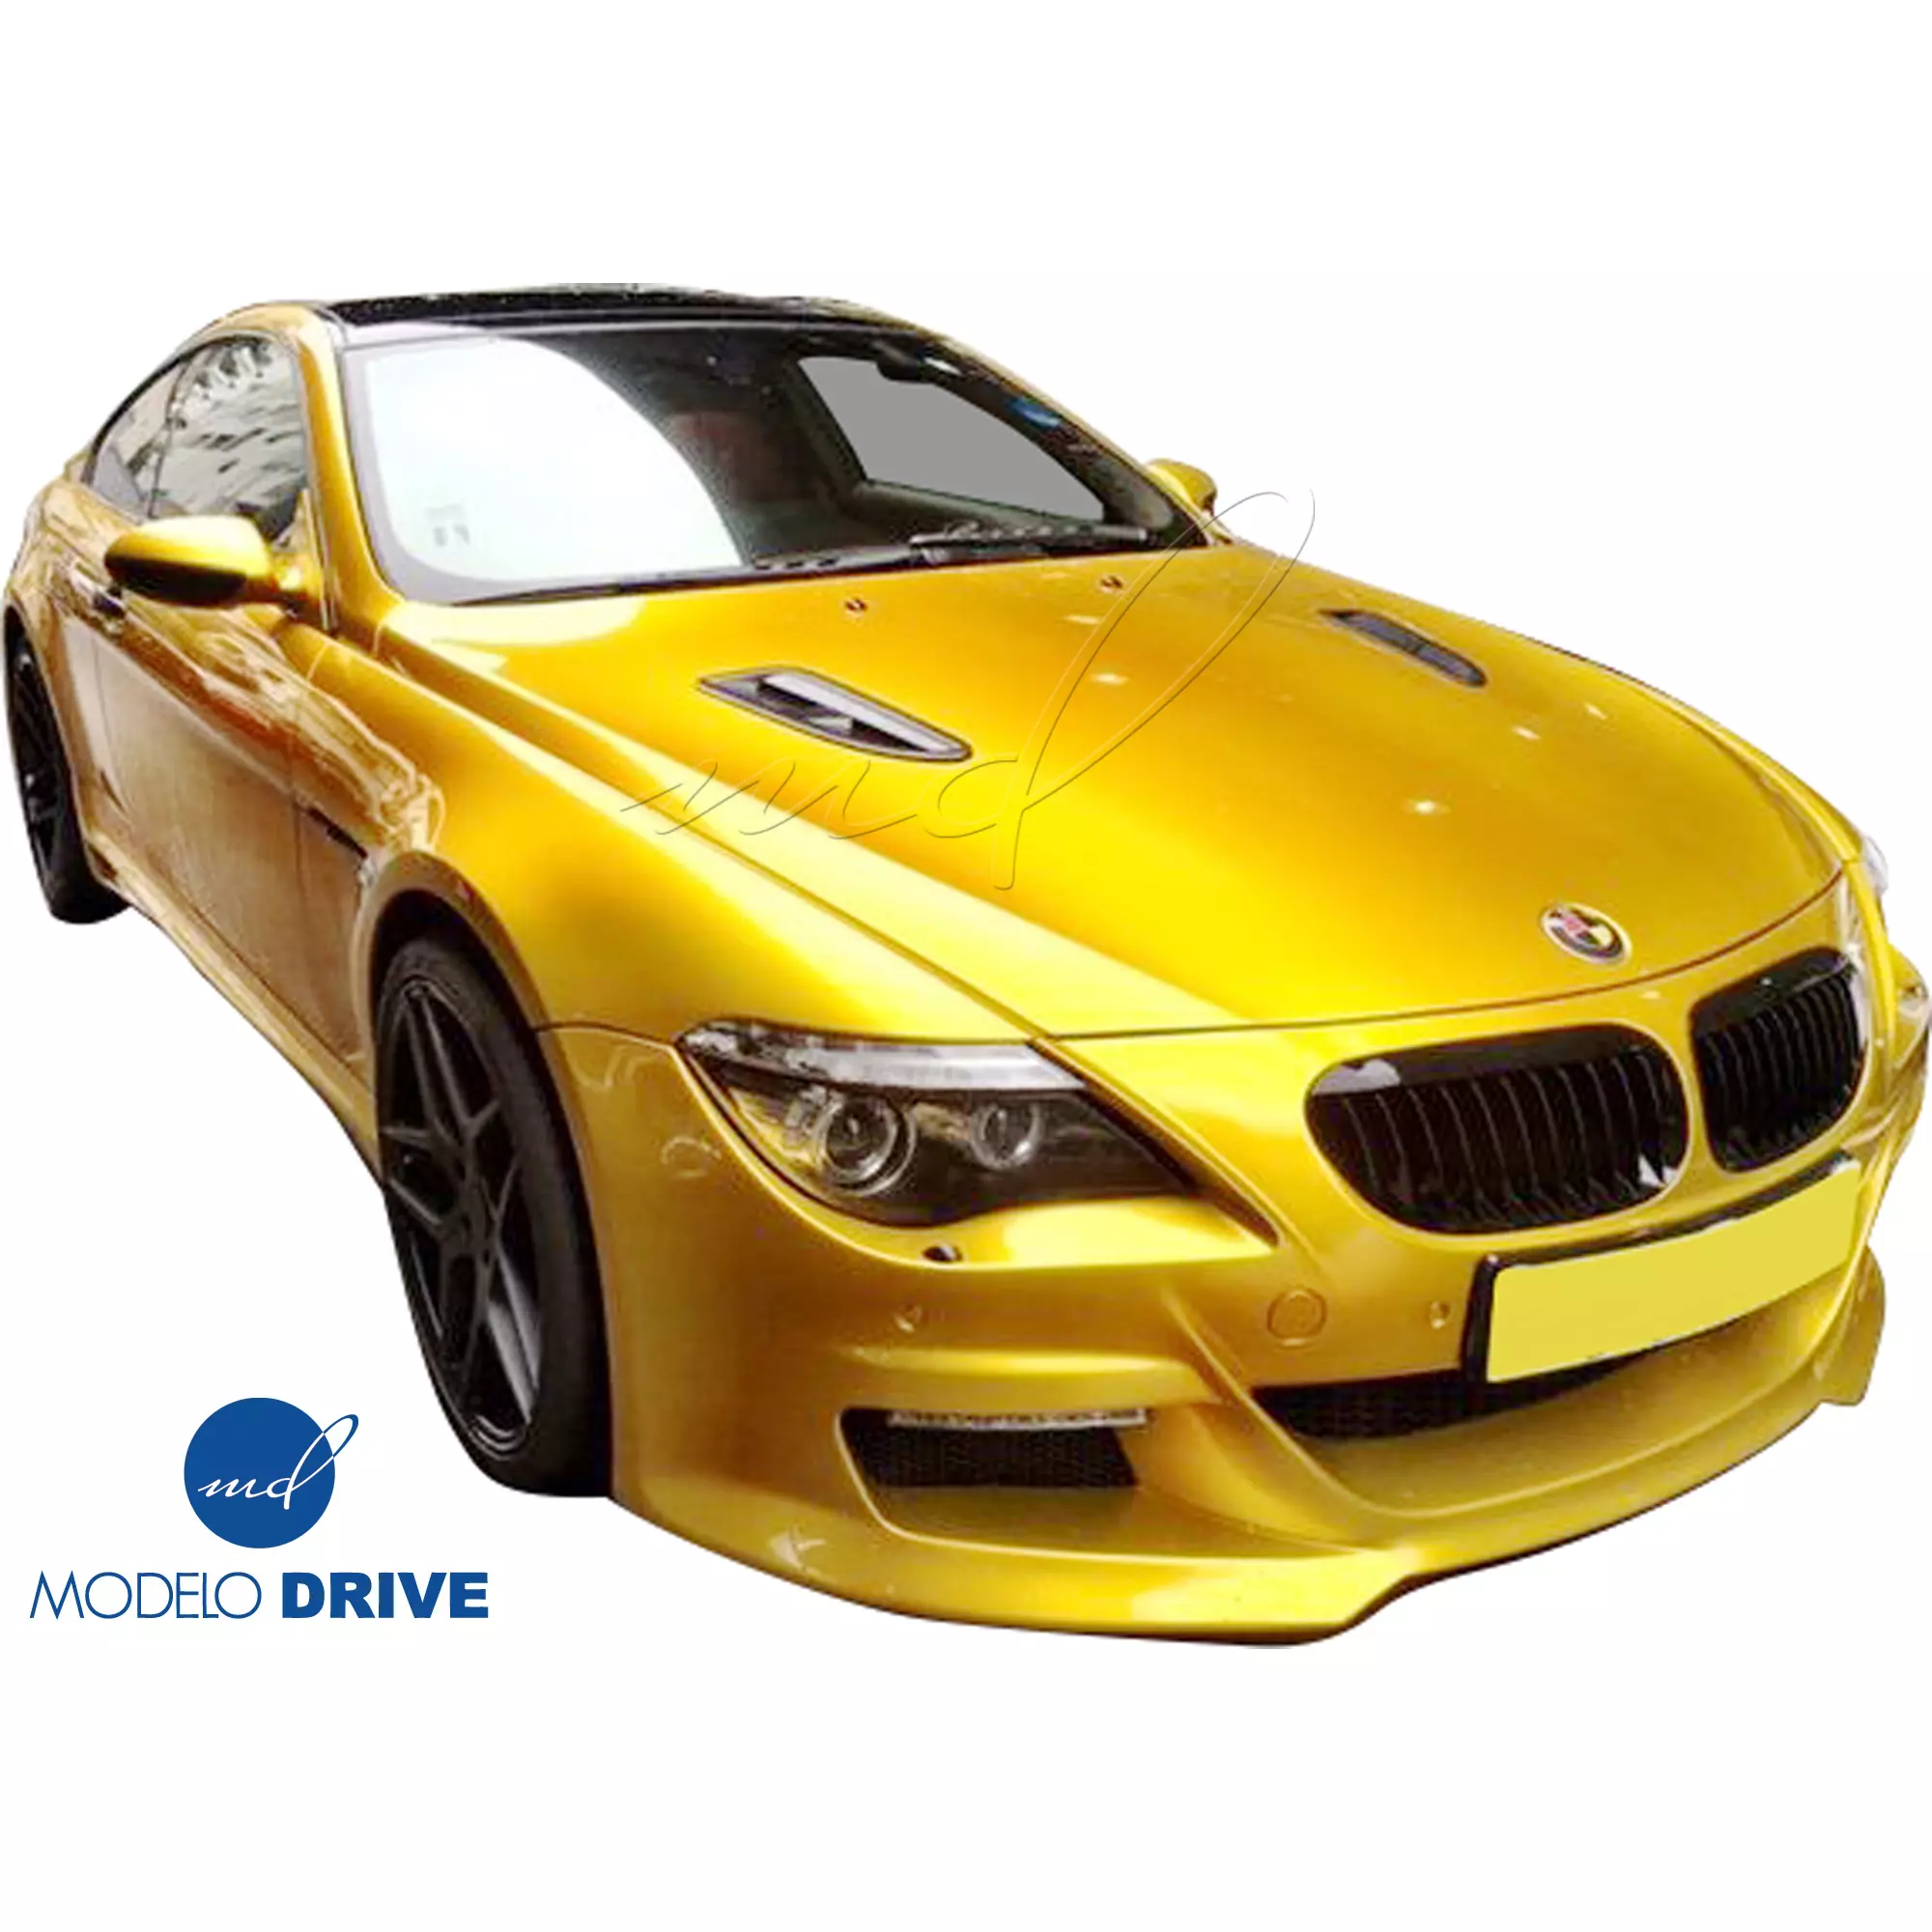 ModeloDrive FRP LDES Front Bumper > BMW 6-Series E63 E64 2004-2010 > 2dr - Image 8